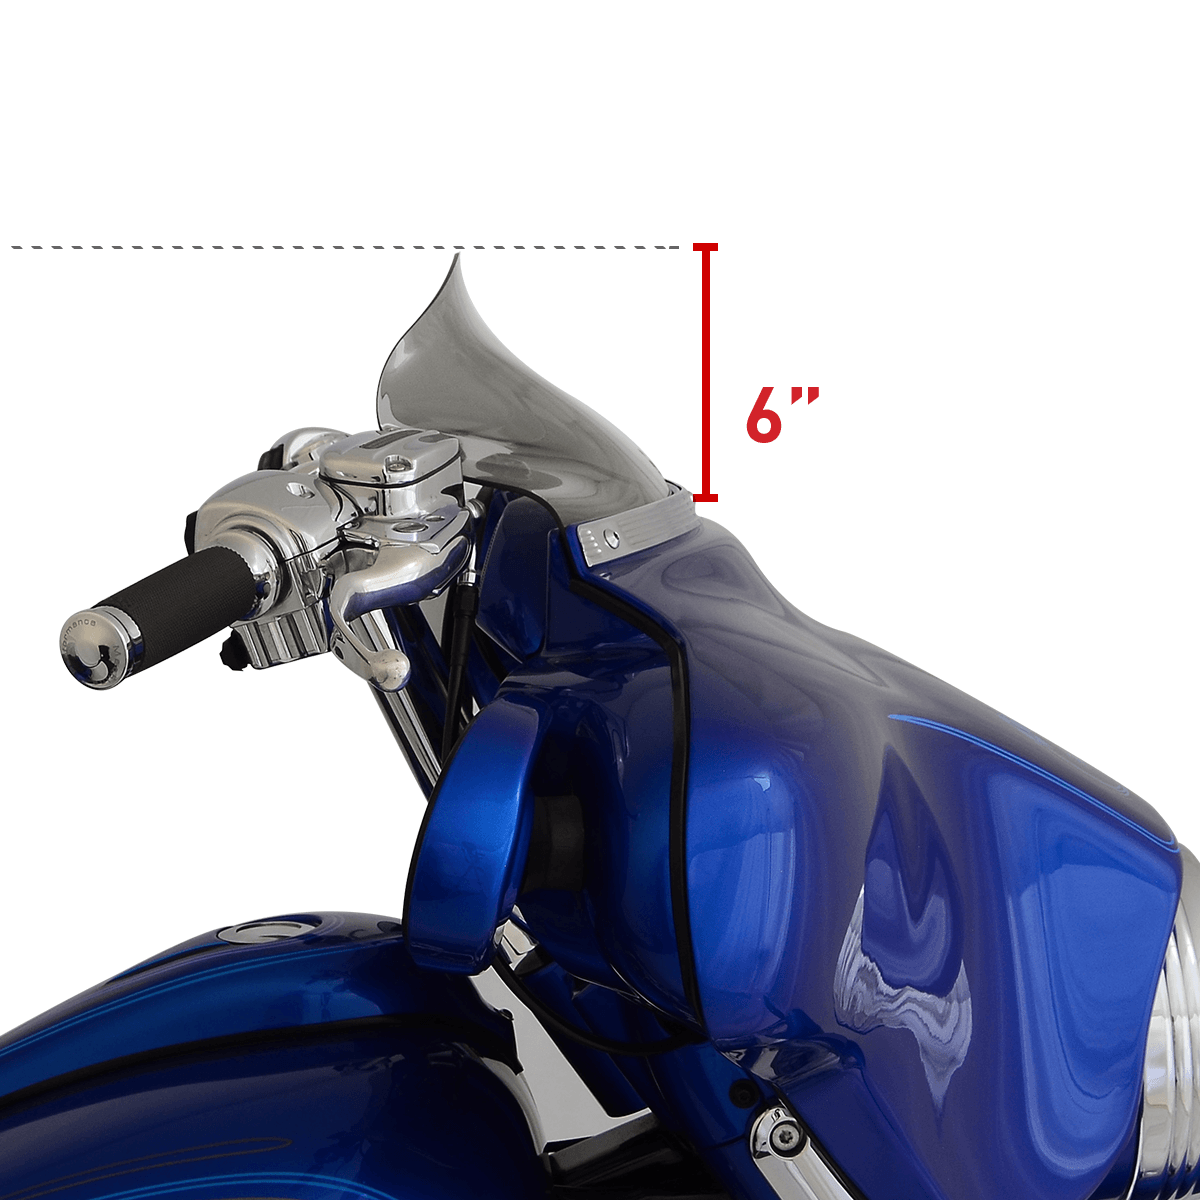 6.5" Tint Flare™ Windshield for Harley-Davidson 1996-2013 FLH Motorcycle Models